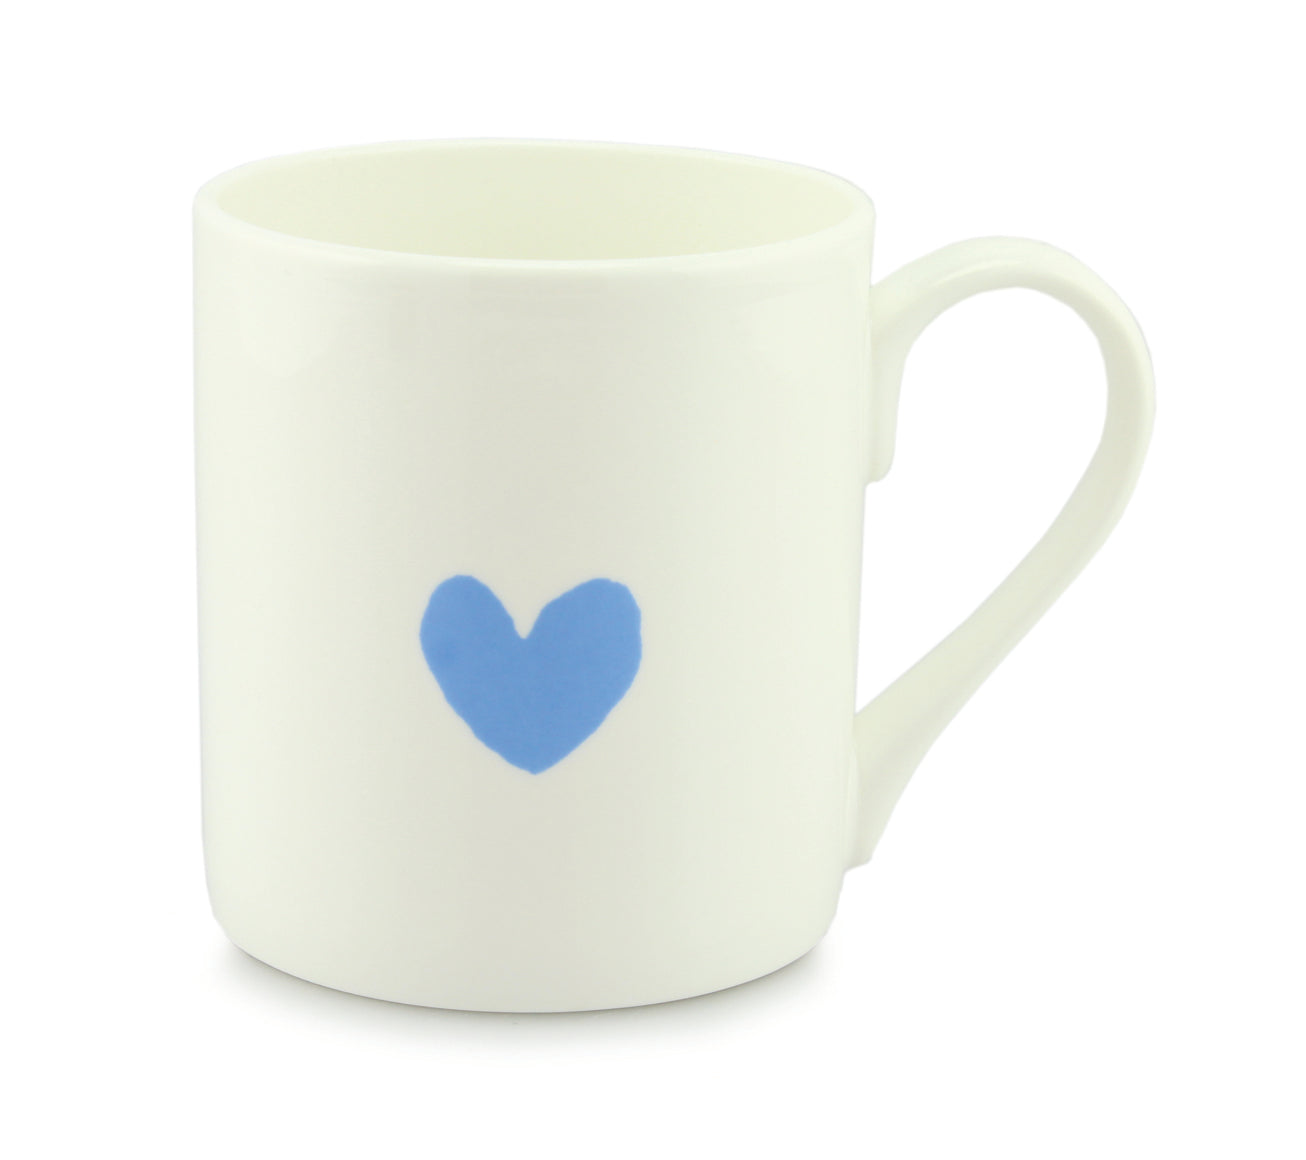 Wee Heart Blue mug